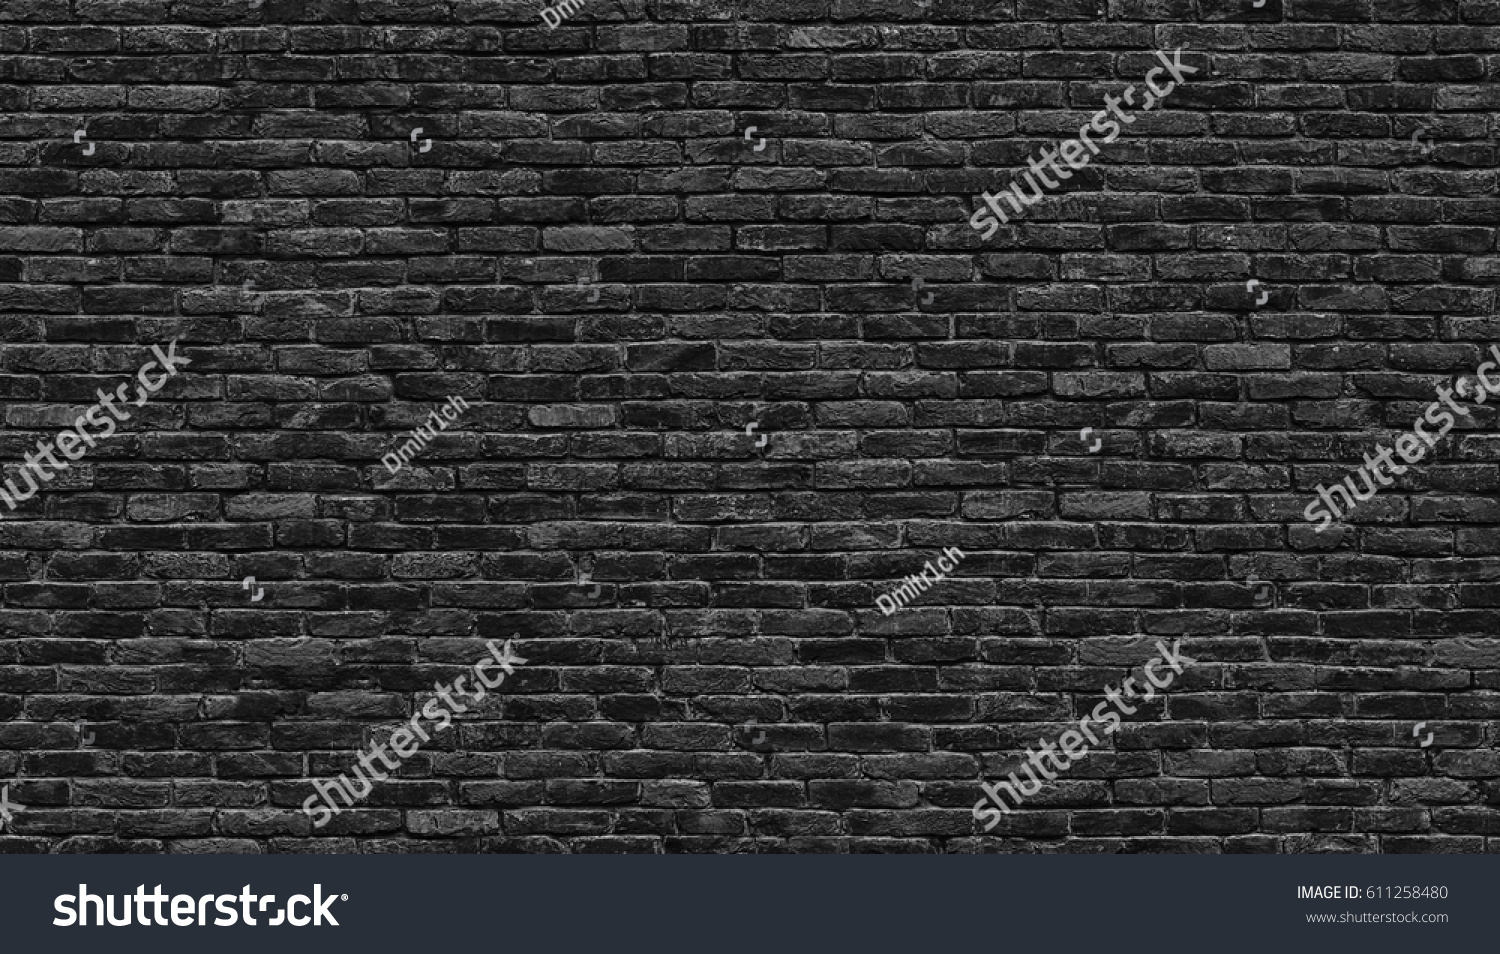 Black brick wall texture, brick surface as background #611258480